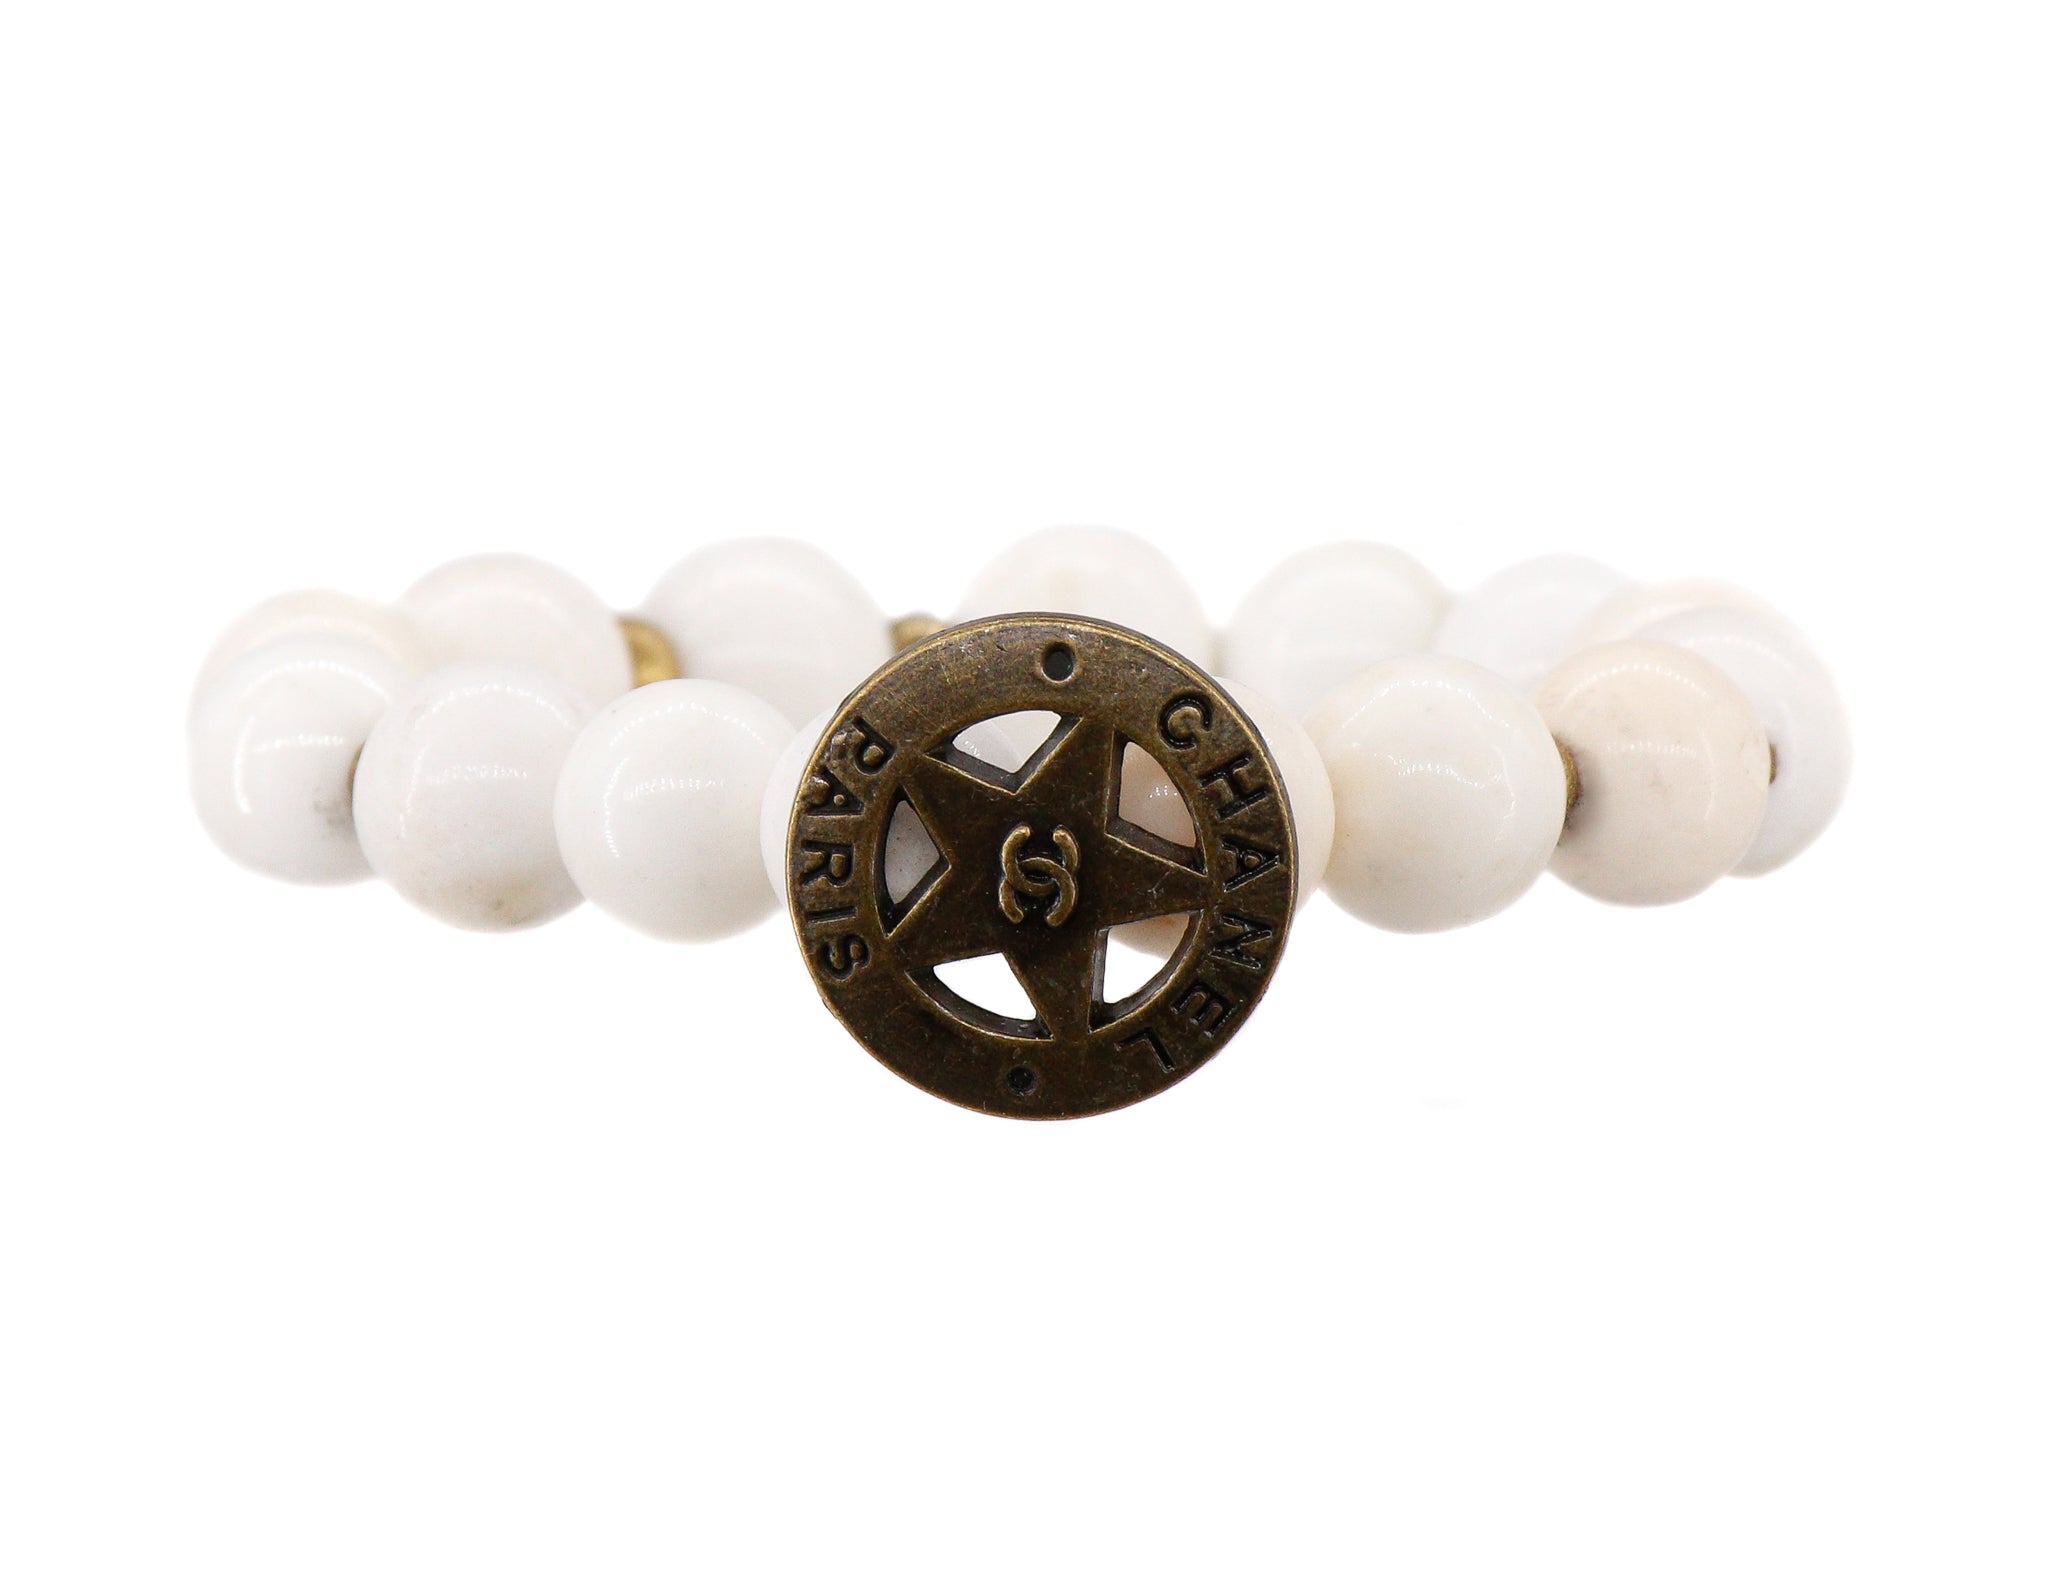 White conch bracelet with a repurposed designer brass button